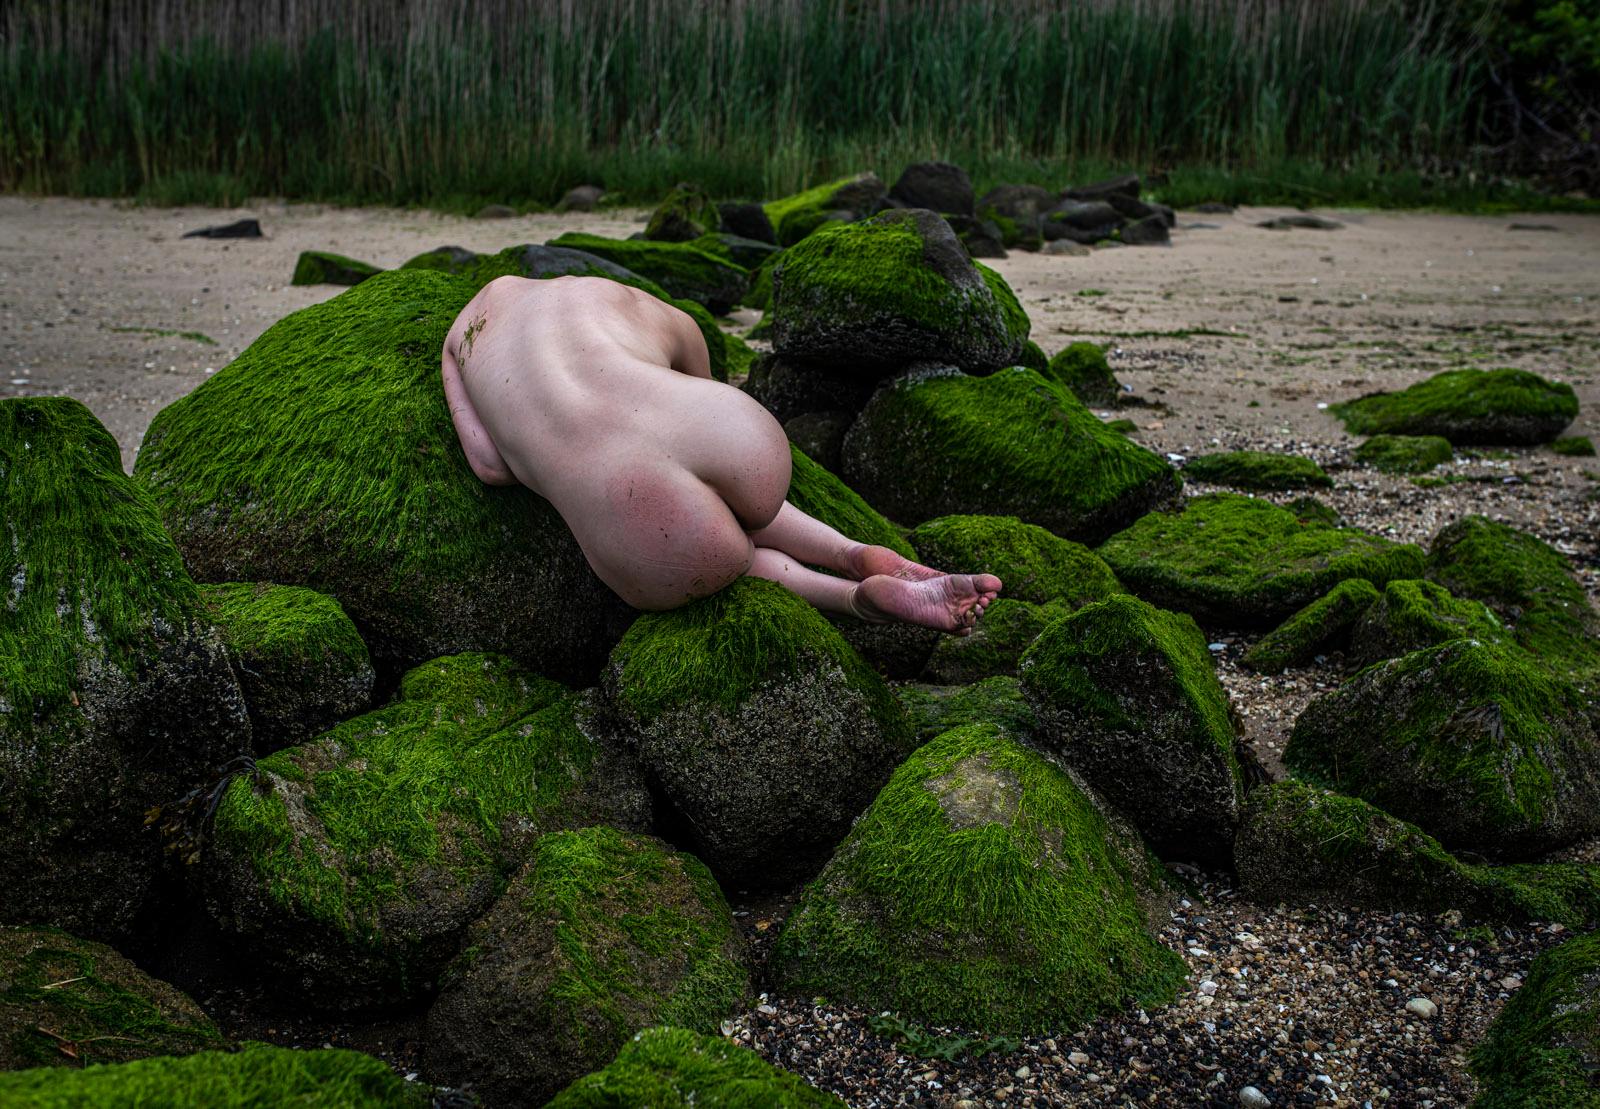 John Mazlish Color Photograph - "Body Rocks 1, Color"- Moody Nude Photo Shot in the Rain on a Beach